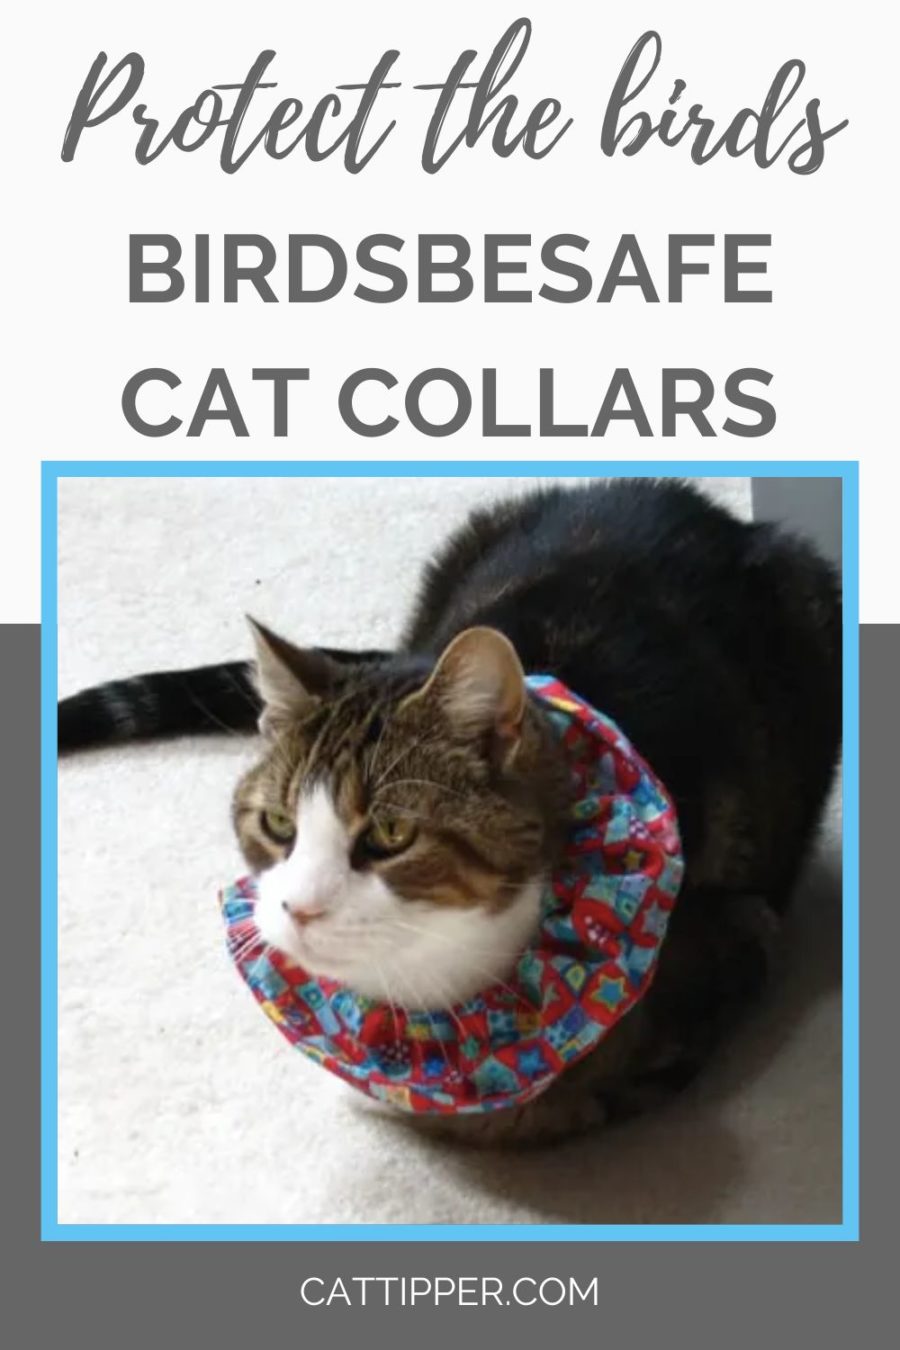 Birdsbesafe Cat Collars - made to help protect birds from outdoor cats